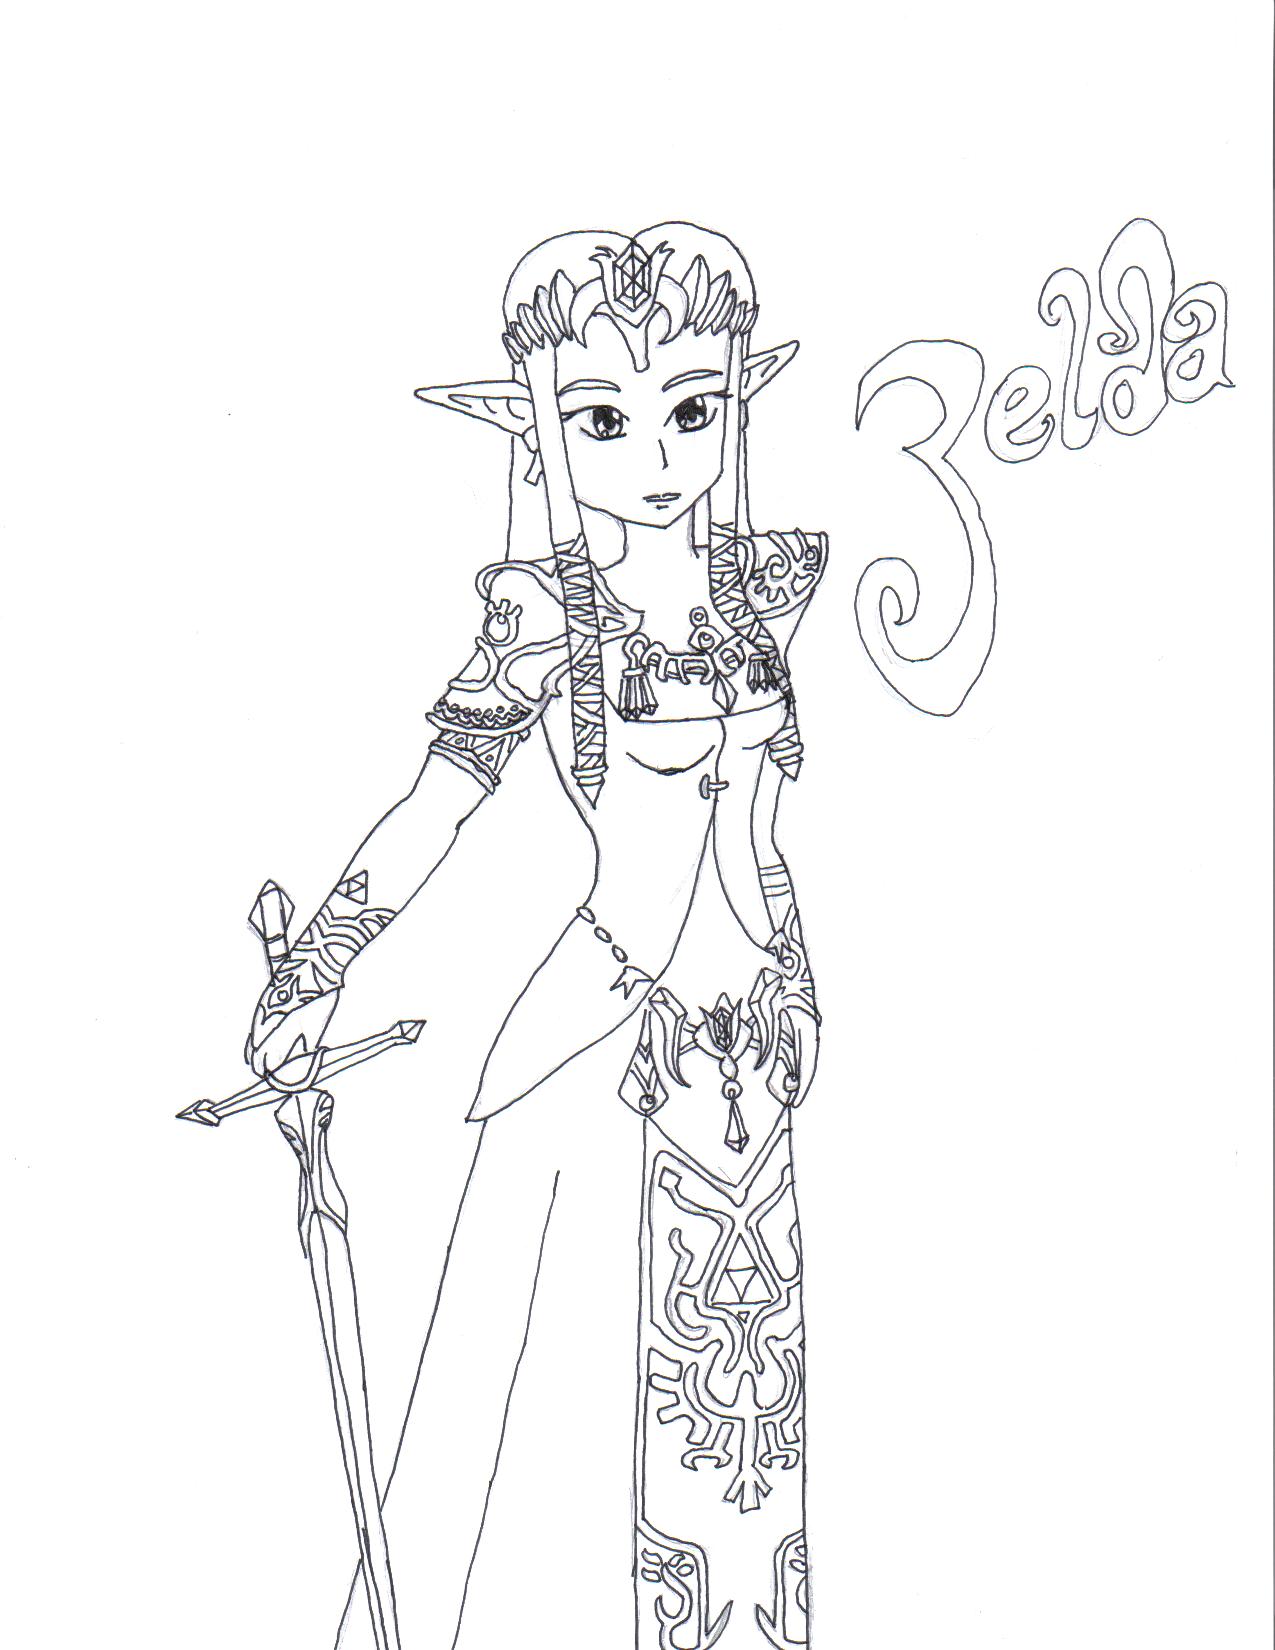 Zelda (Line Art) by Hidden_whisper